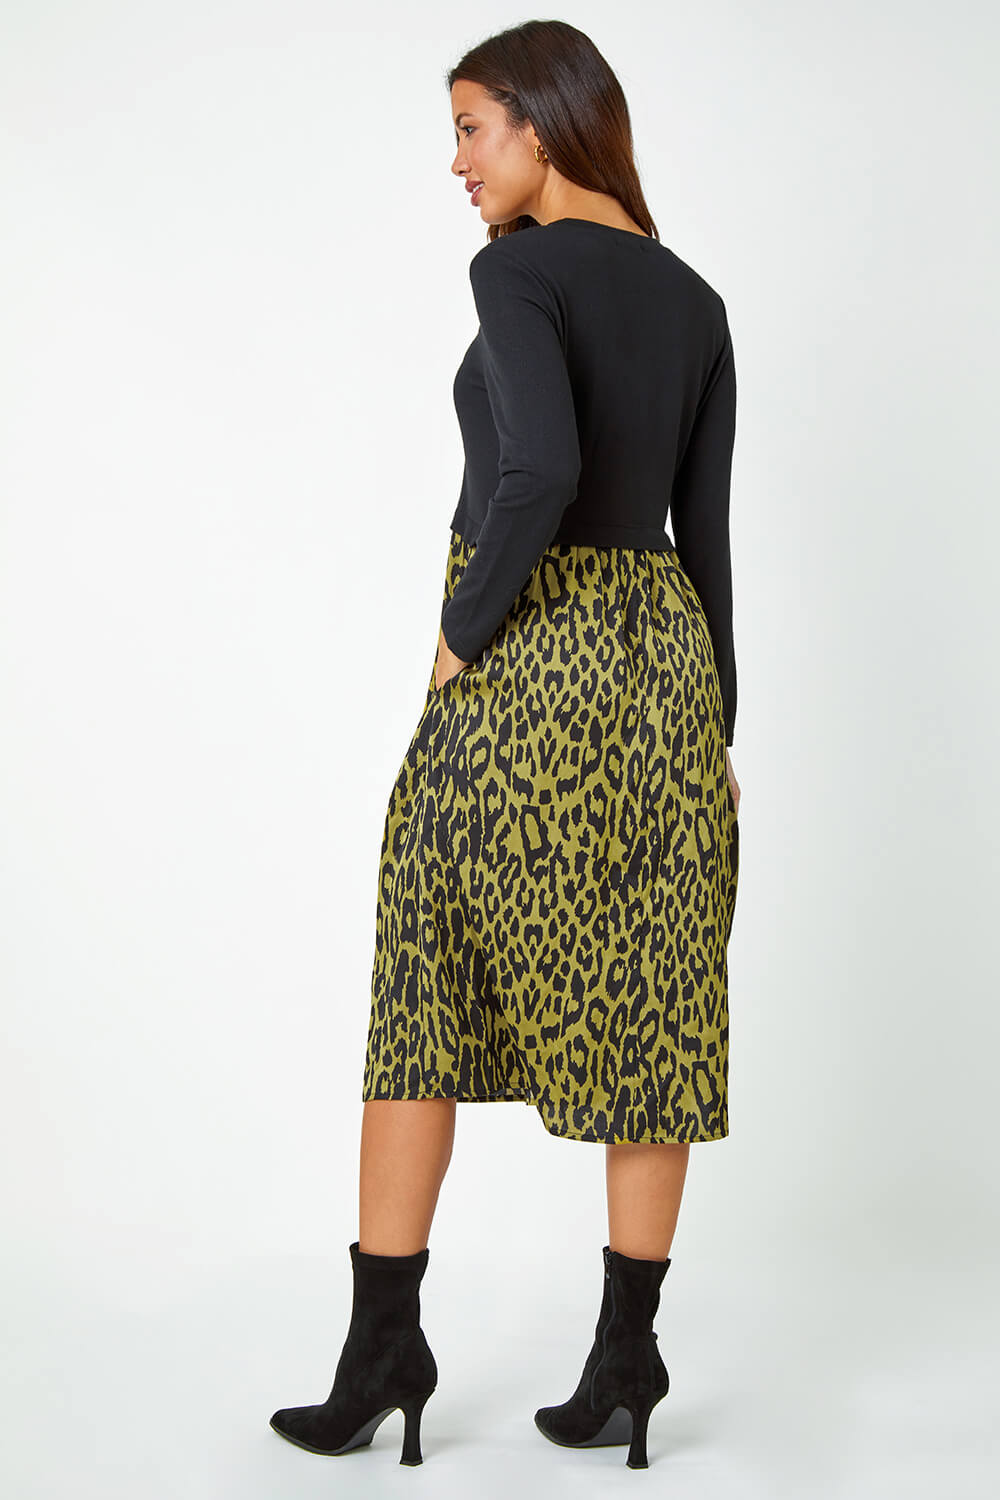 Black Contrast Leopard Print Pocket Knit Midi Dress, Image 3 of 5